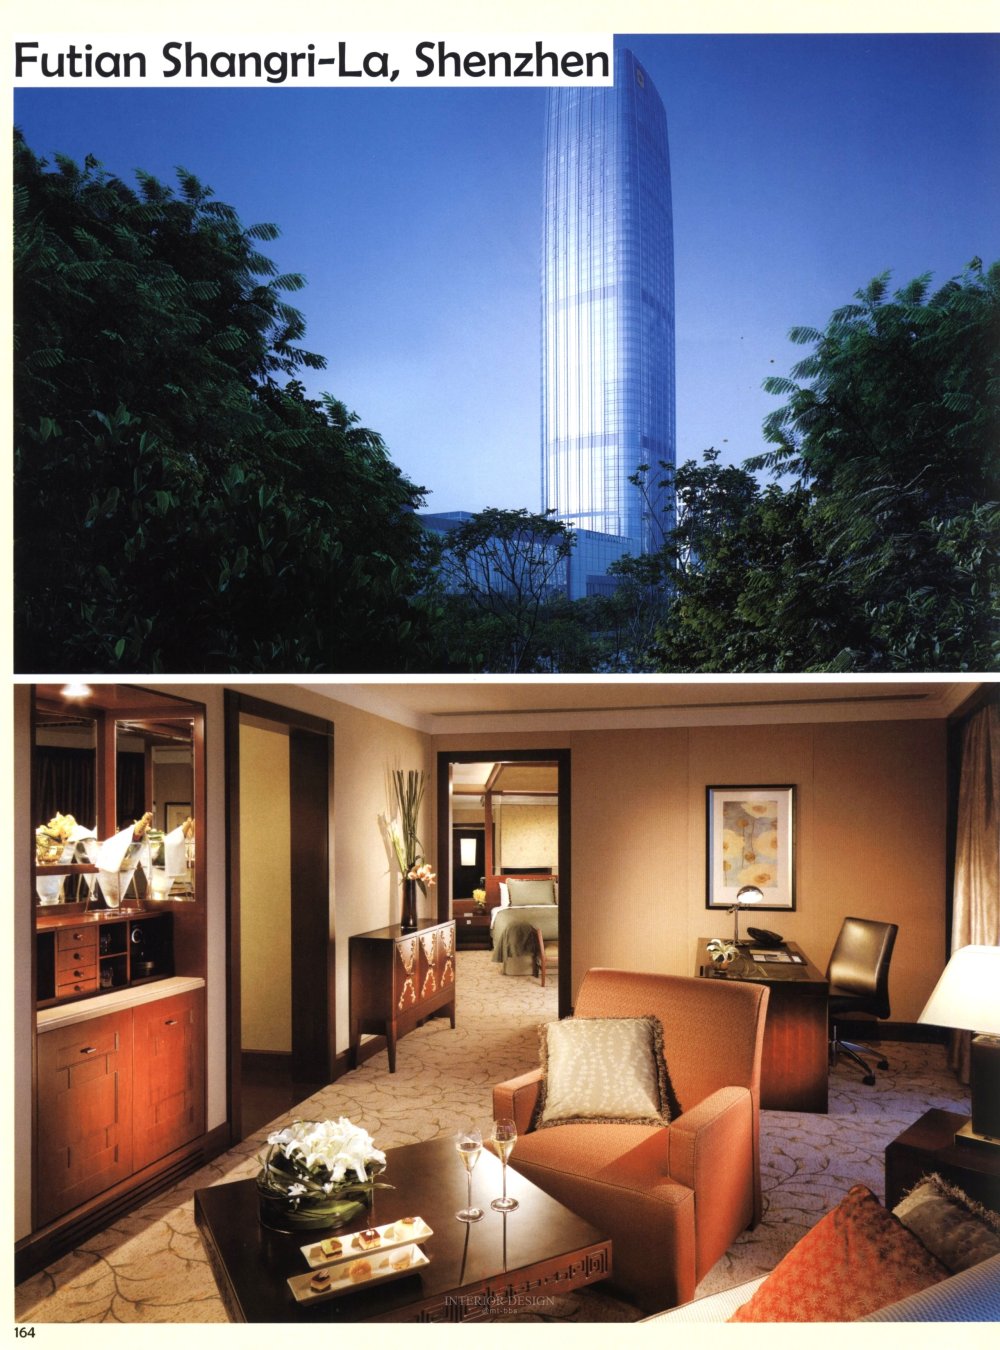 101全球酒店客房 101HOTELS GUEST ROOMS_图站_AiJpgg_com_159.jpg